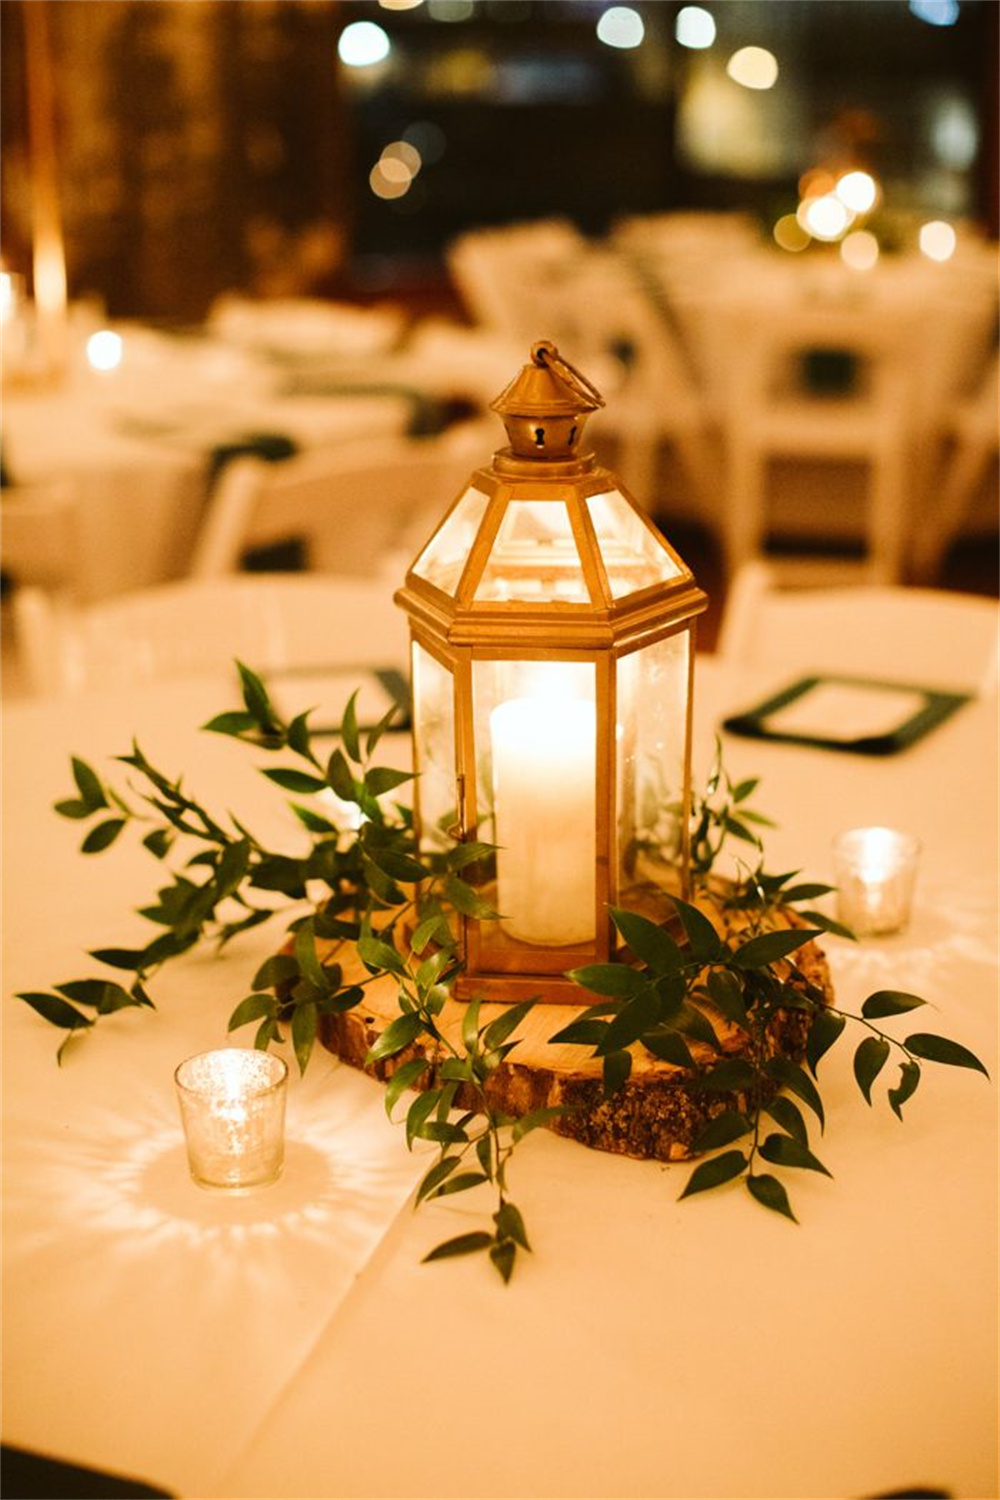 Shiny Lantern Wedding Centerpiece with greenery